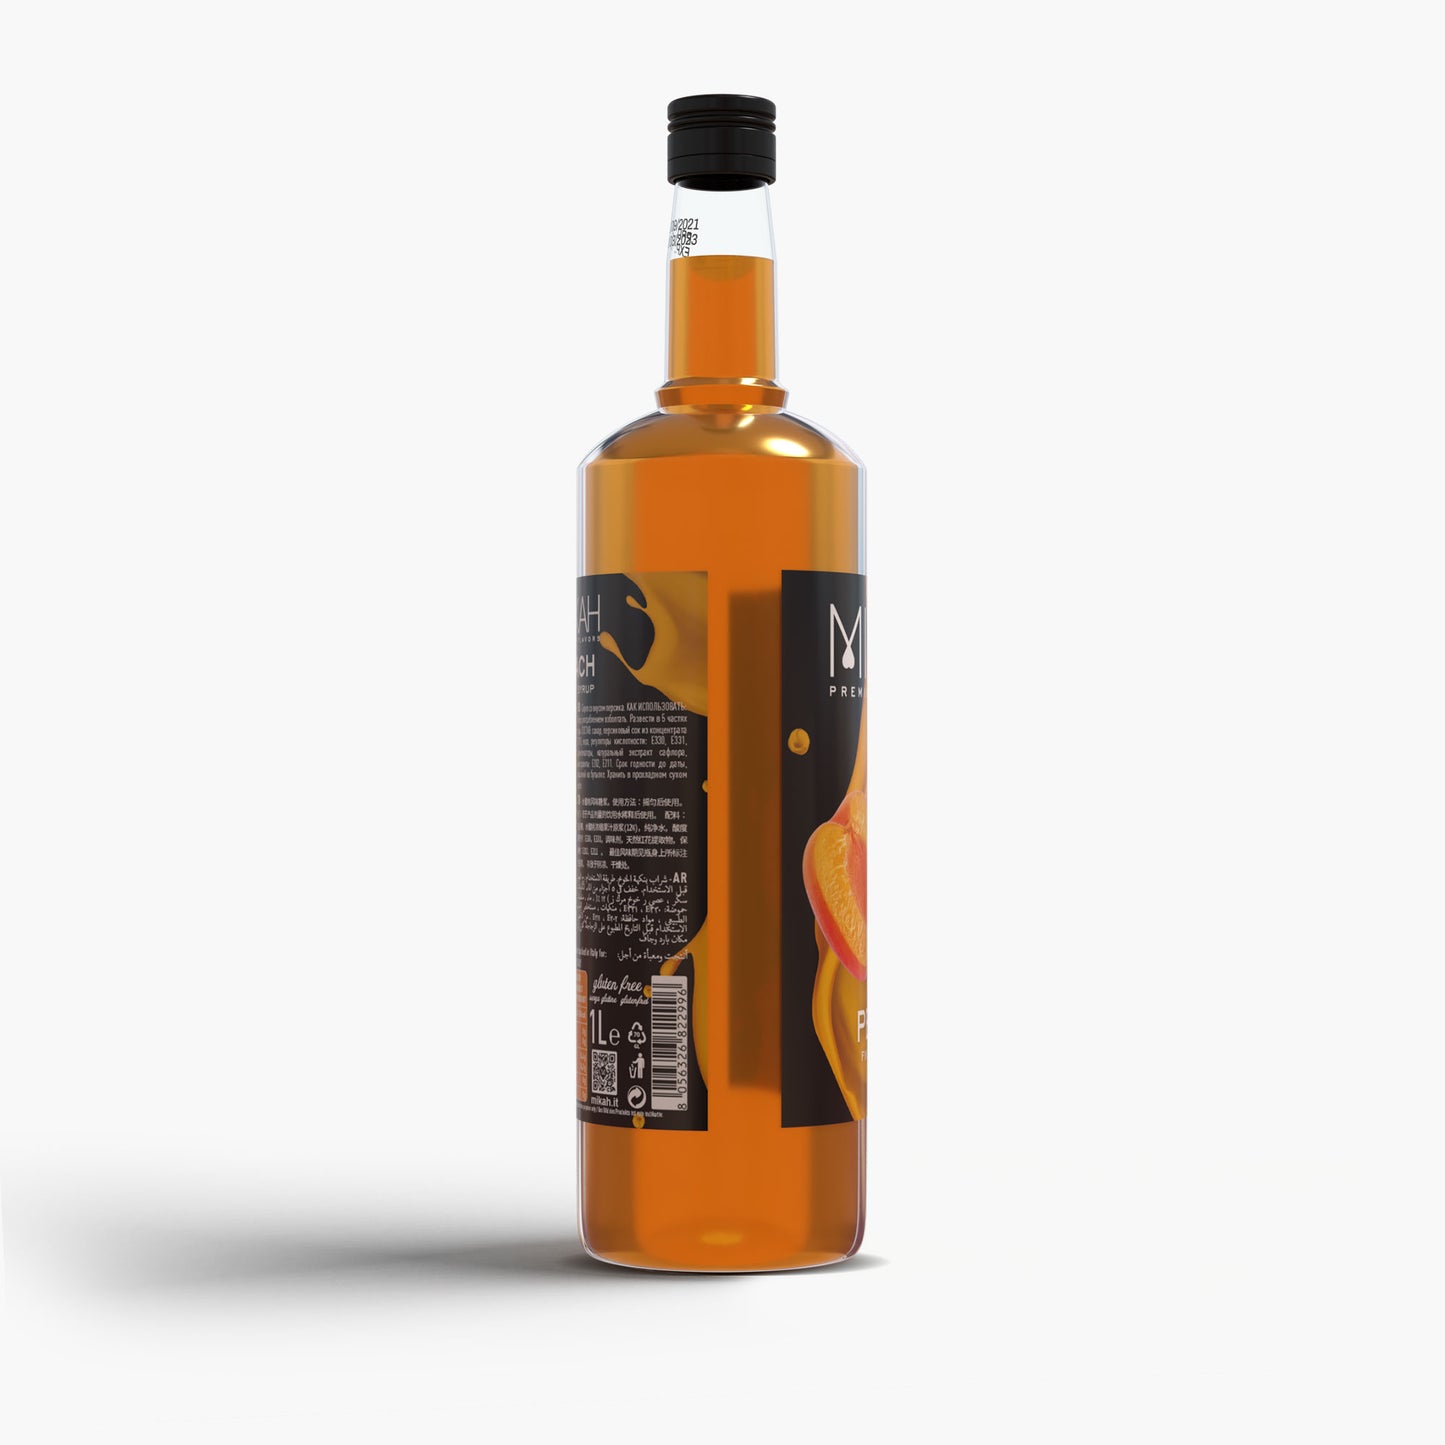 
                  
                    Syrup Mikah Premium Flavors - Peach 1L
                  
                